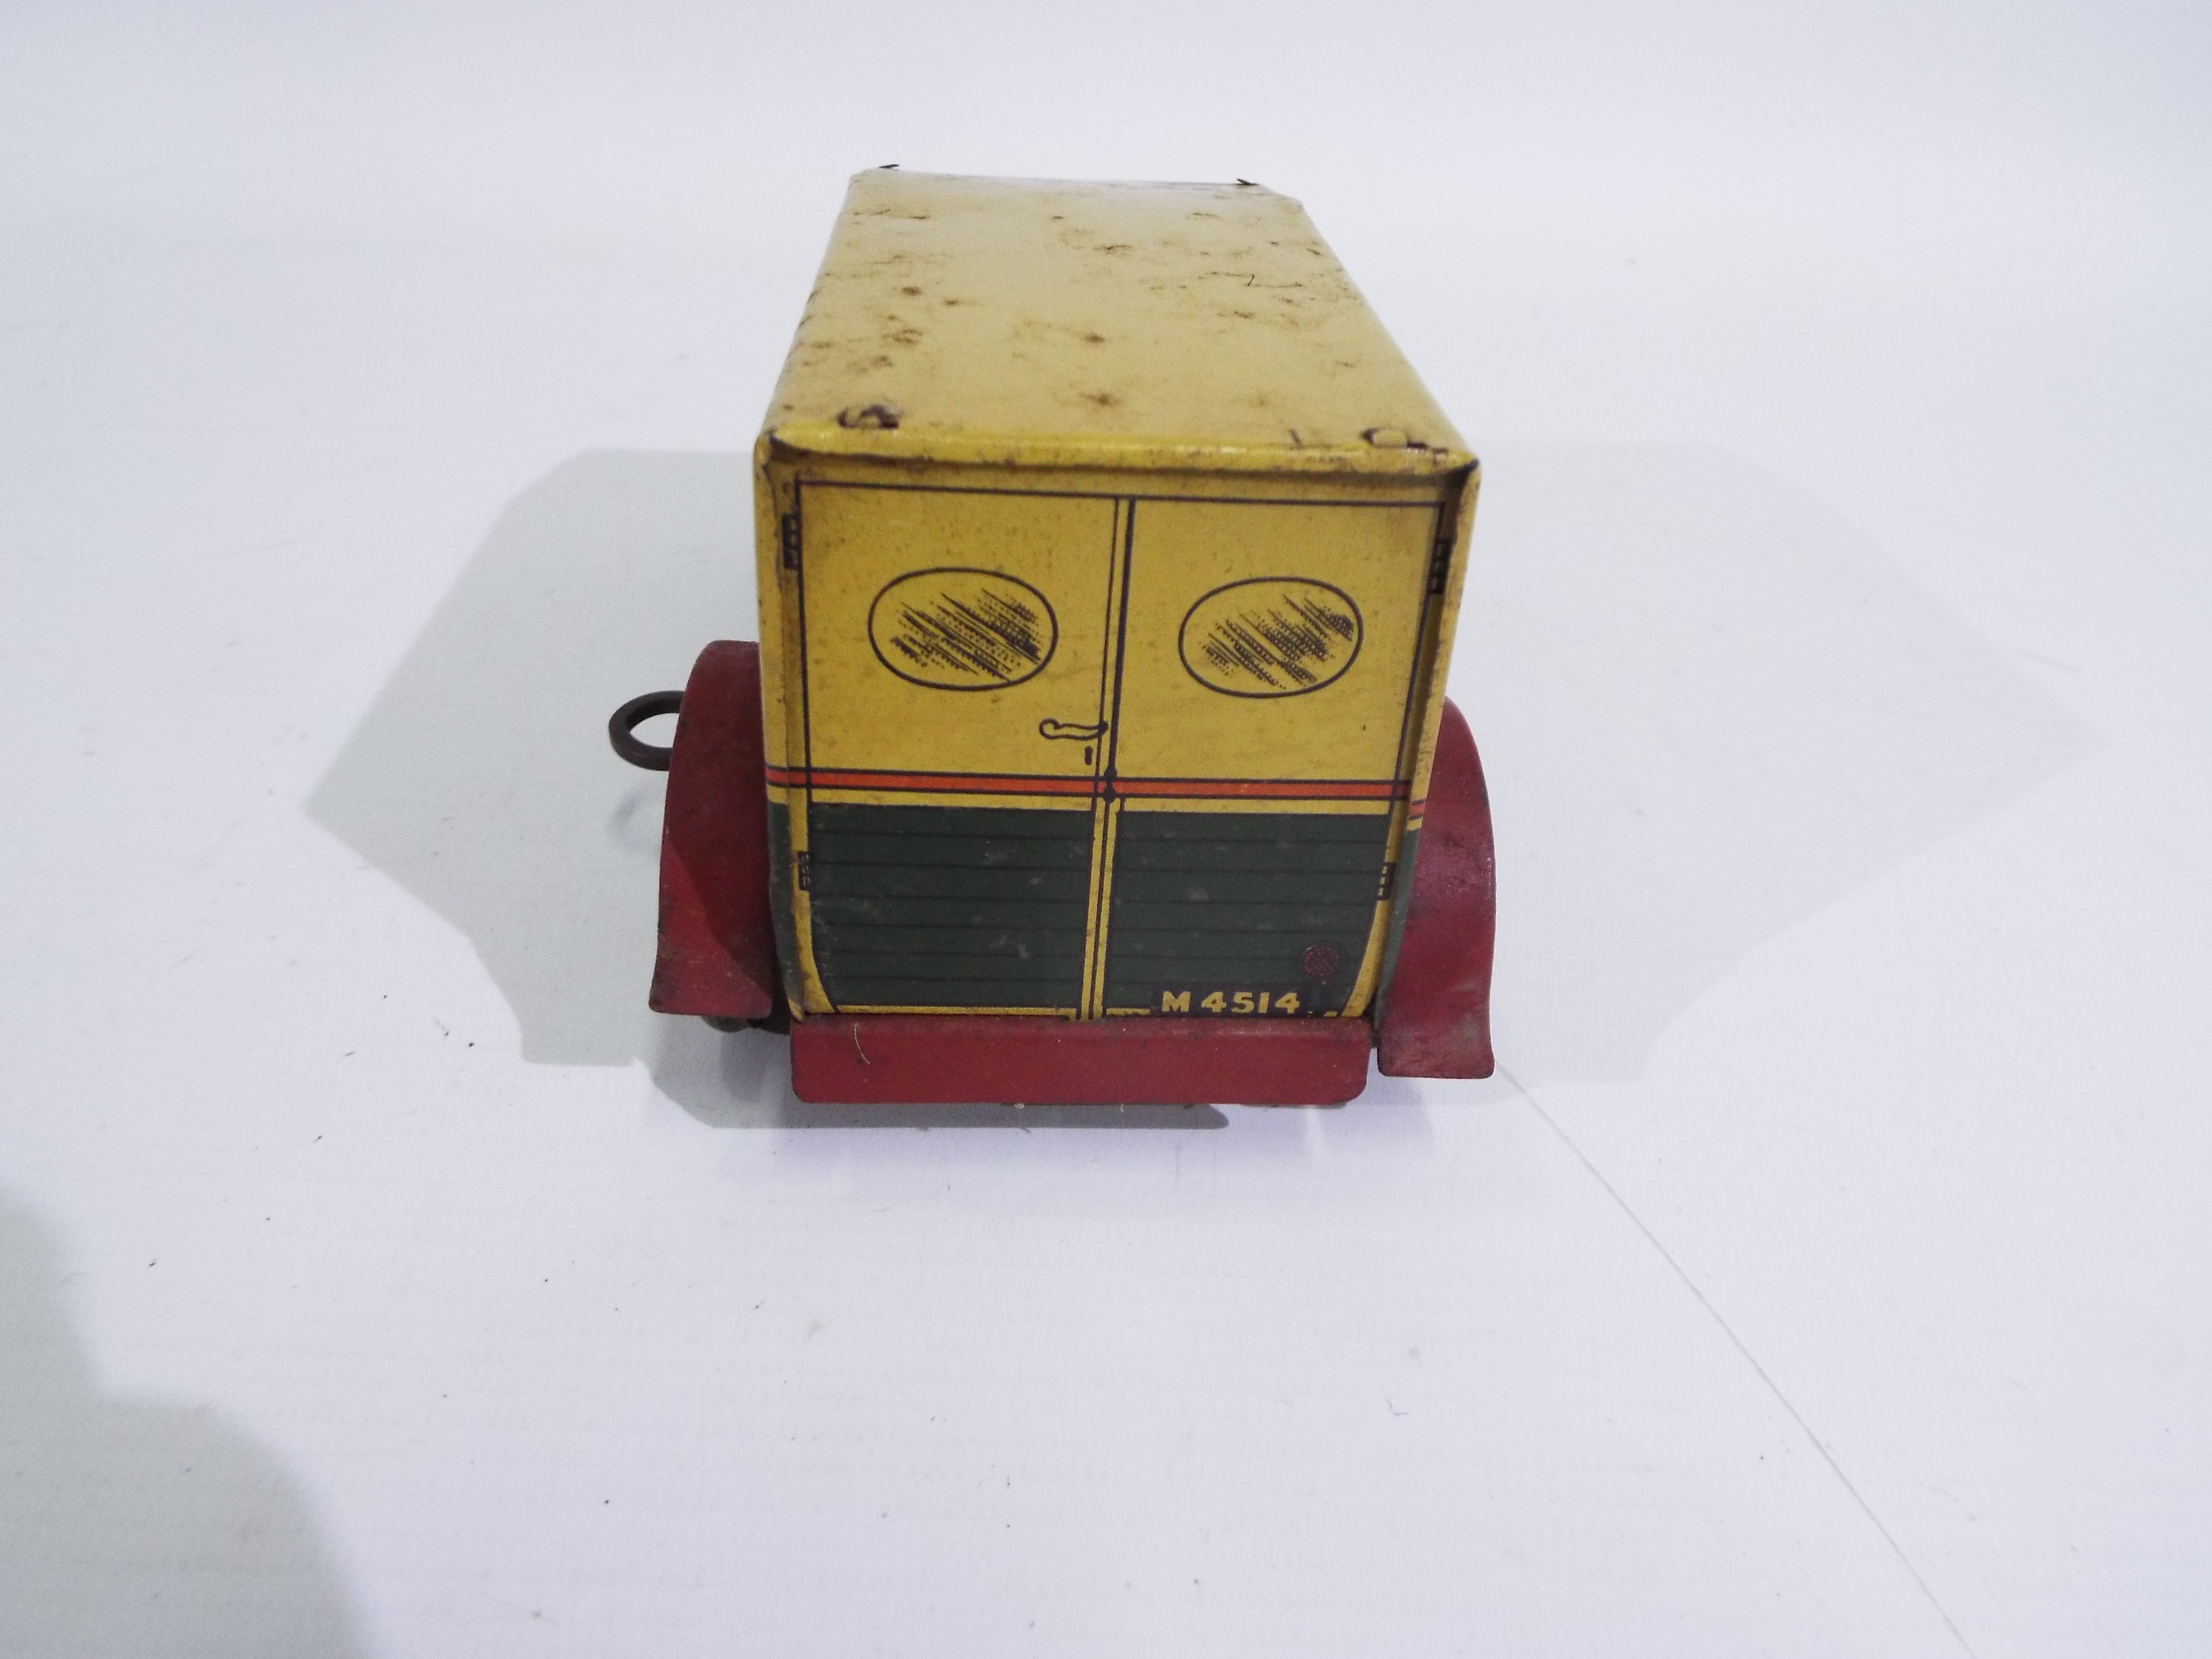 Wells O London - A clockwork tinplate Express Transport van. - Image 3 of 4